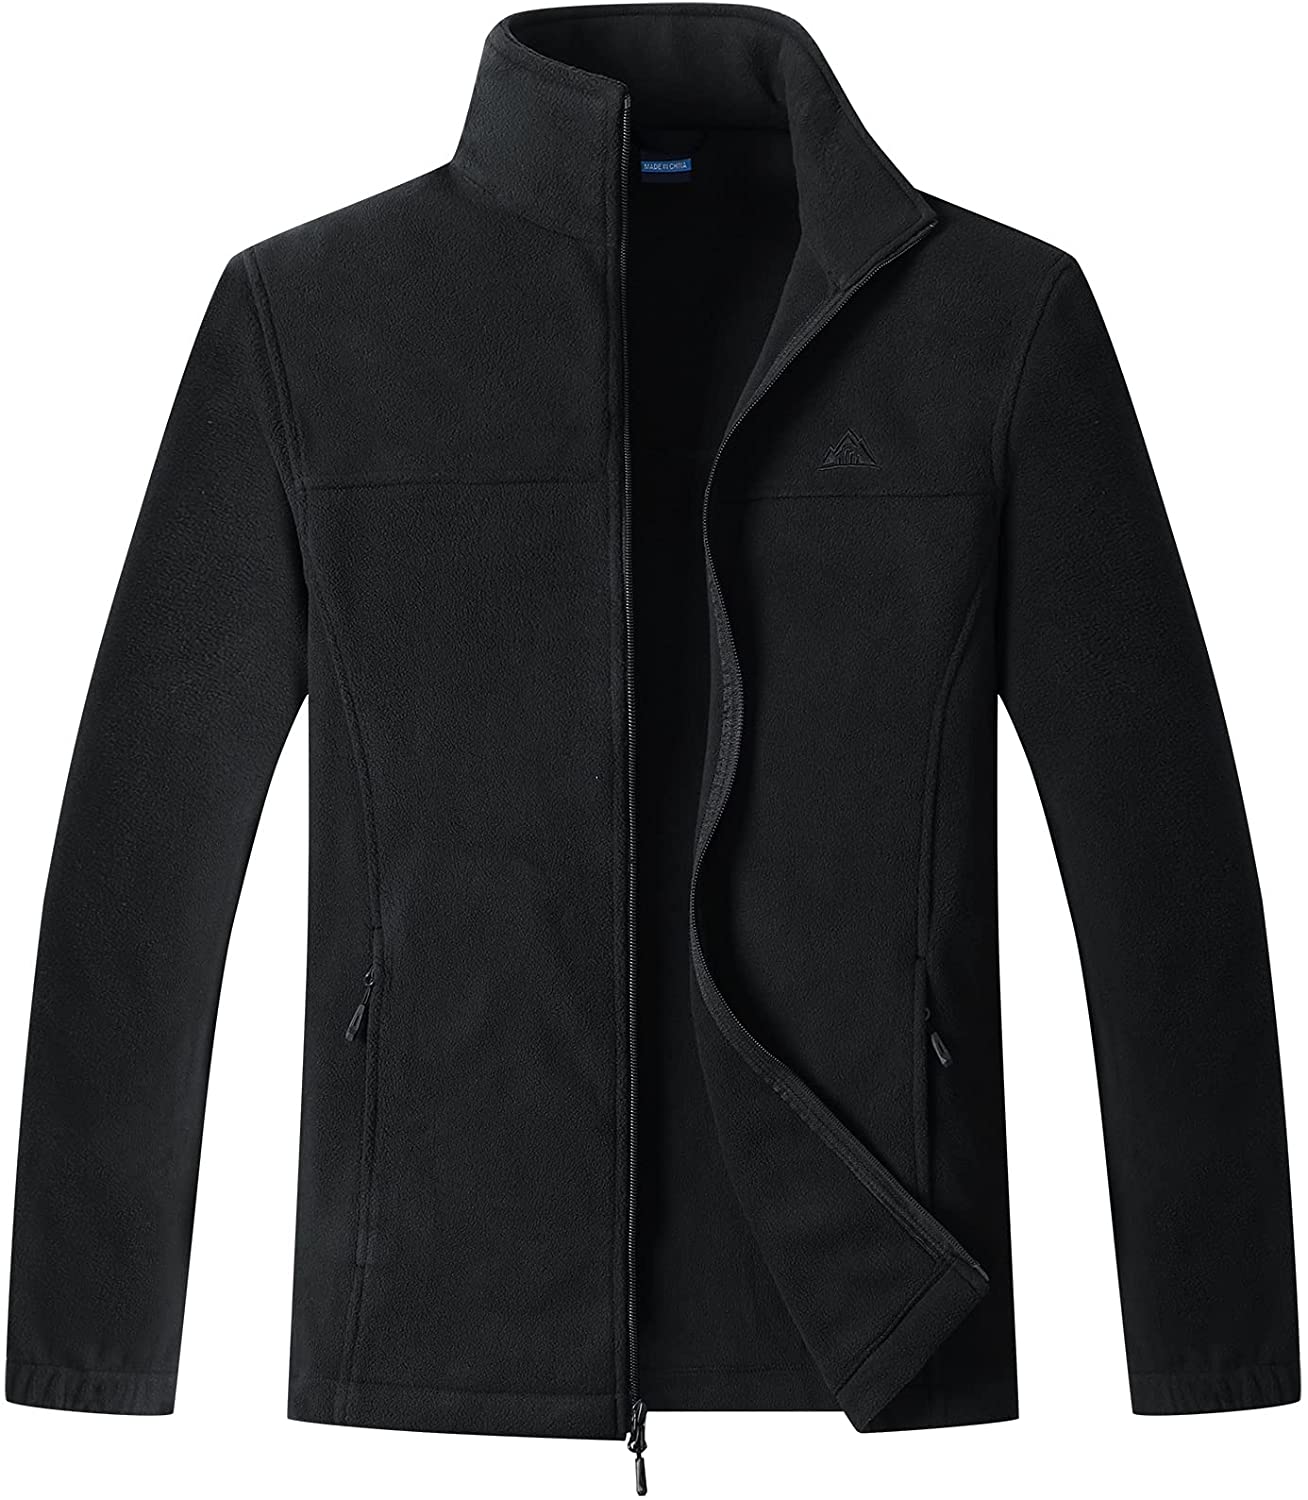 Men's Lightweight Full Zip Soft Polar Fleece Jacket Outdoor Recreation Coat With Zipper Pockets